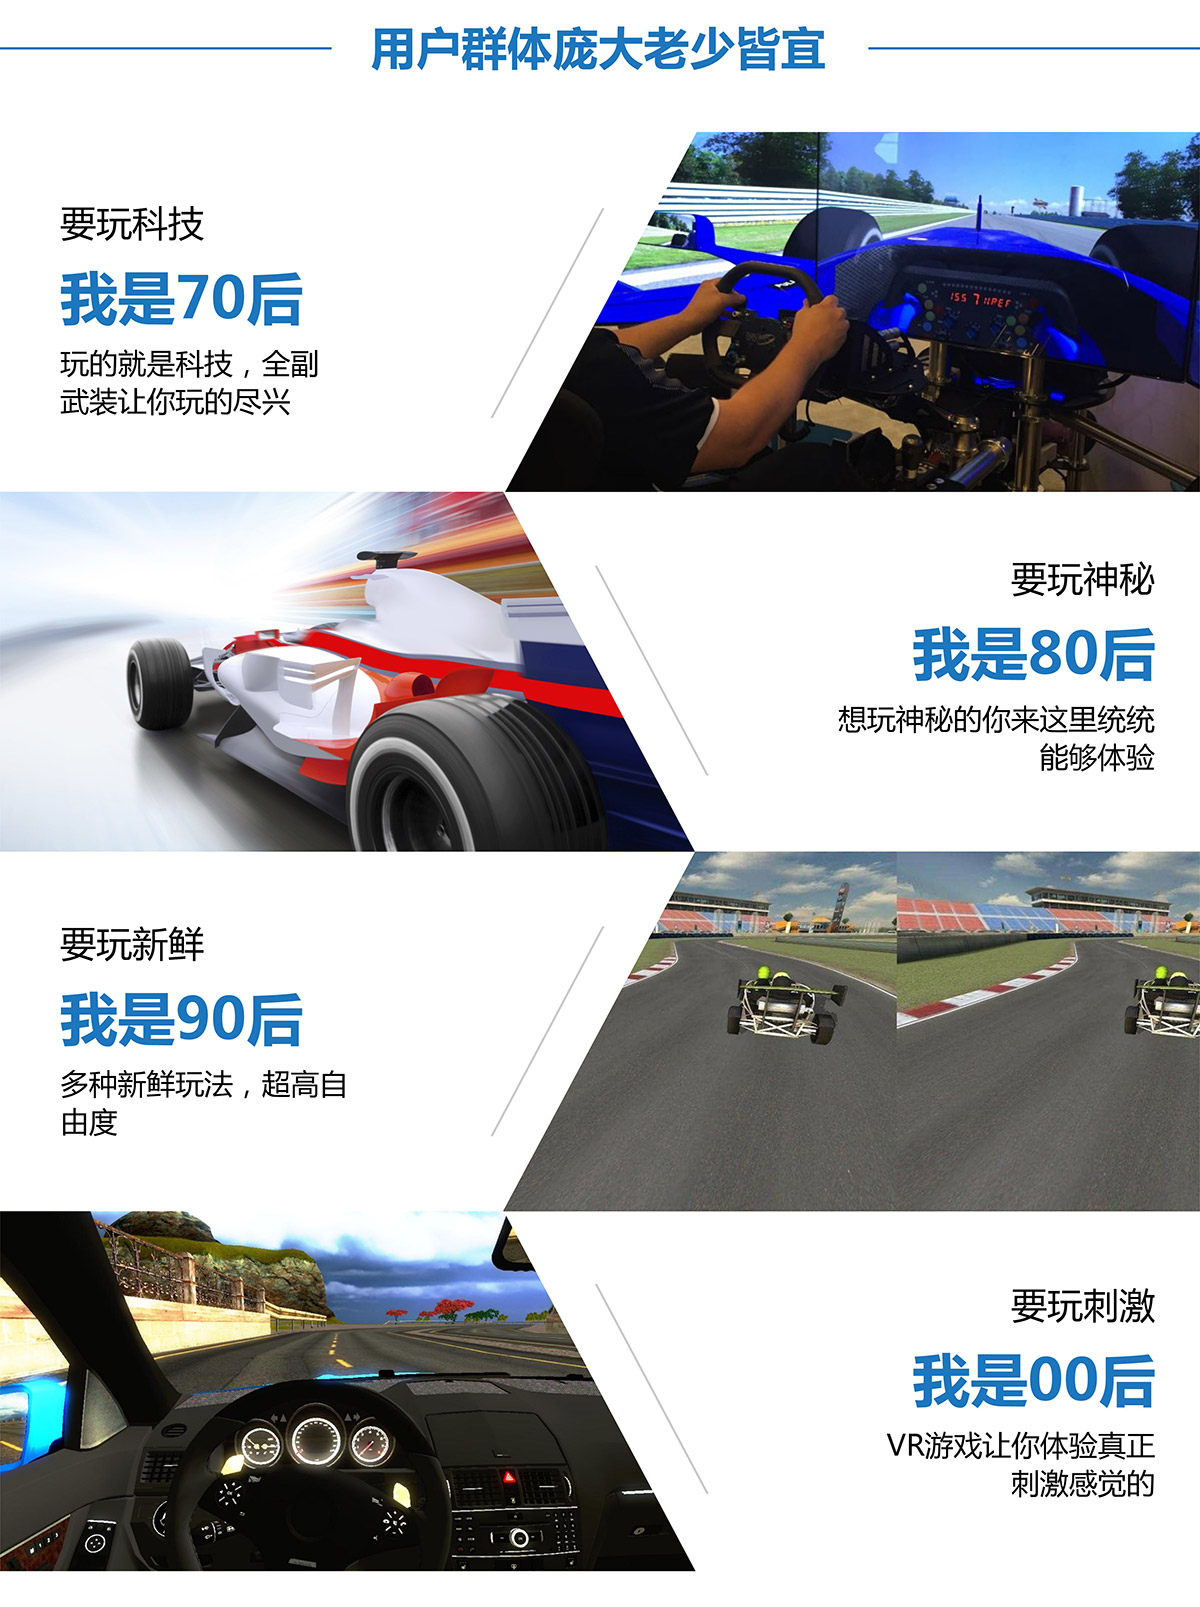 VR台风赛车用户群体庞大老少皆宜.jpg